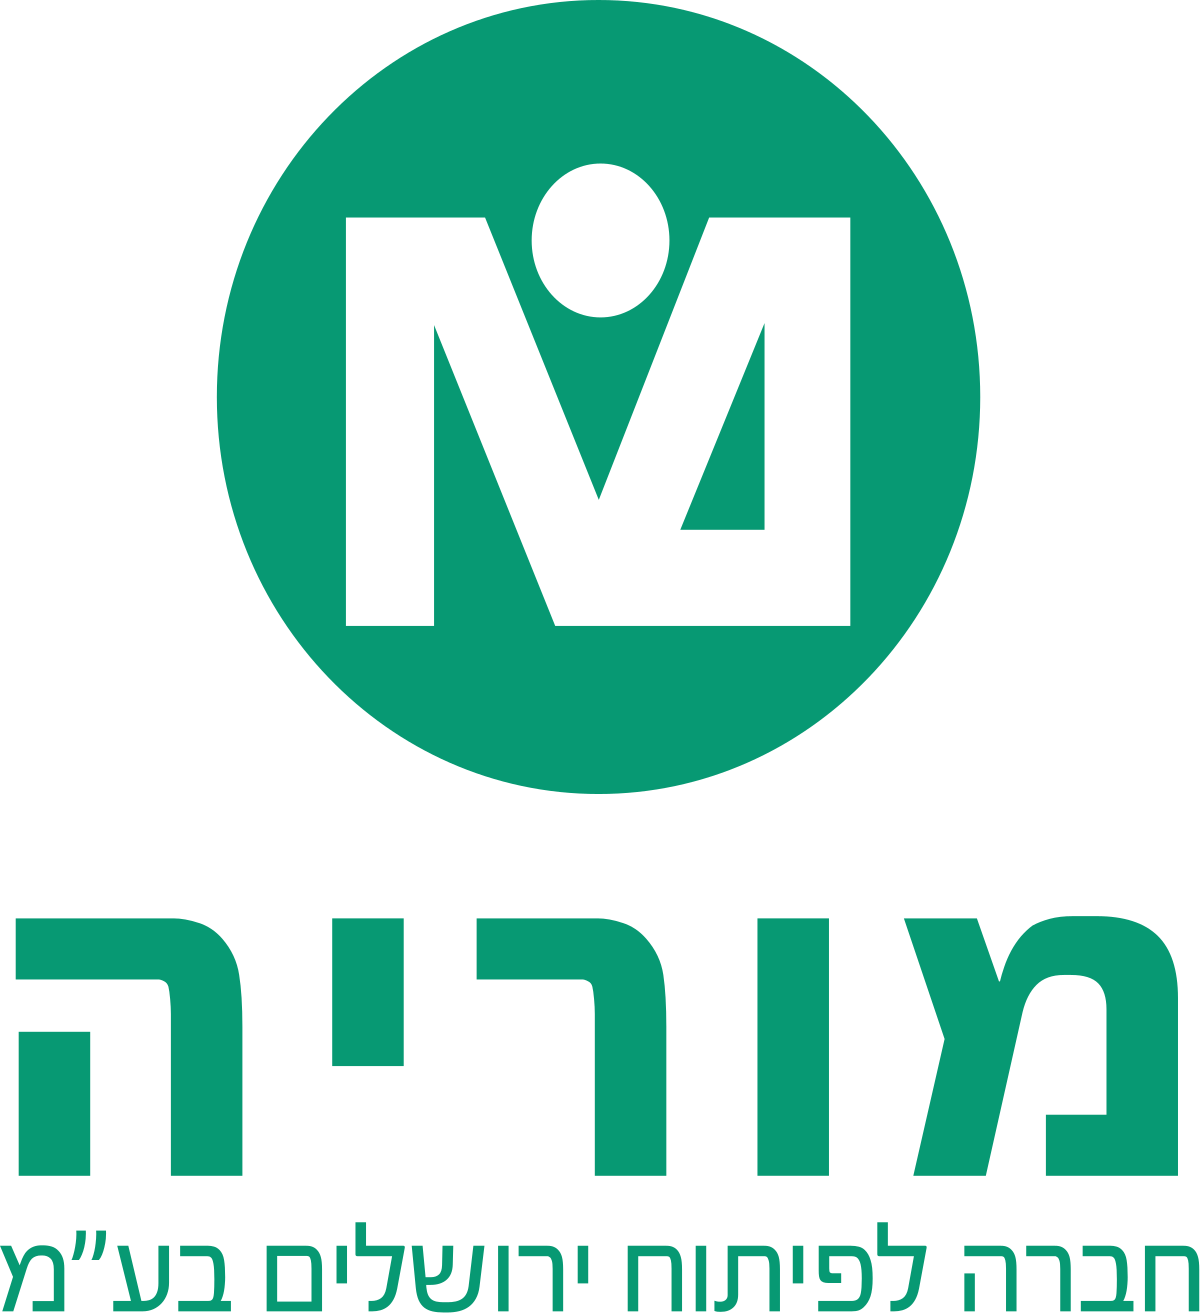 Moriya- Company for Jerusalemws Development